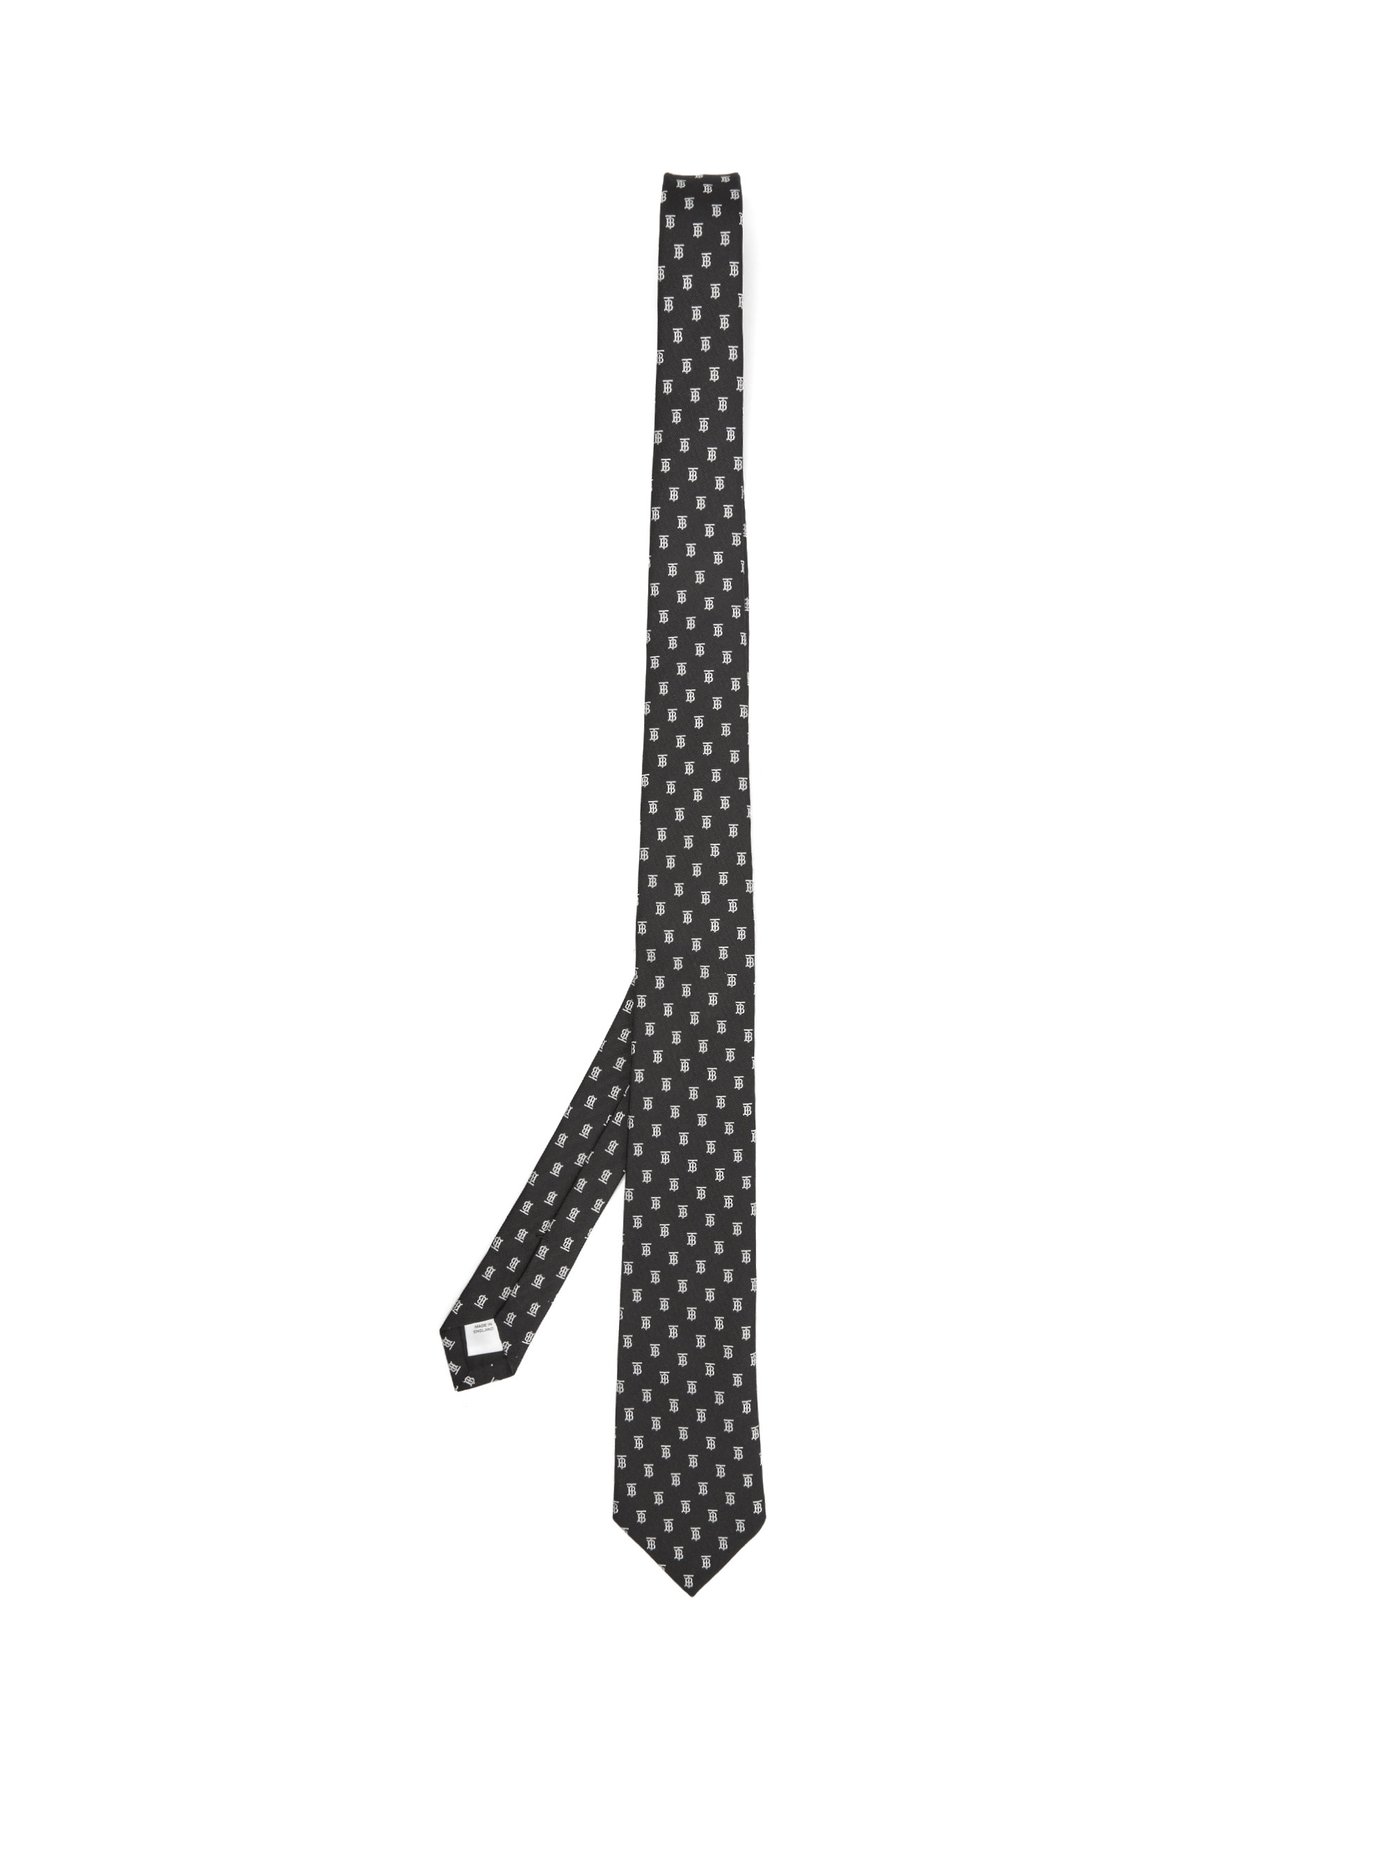 black burberry bow tie